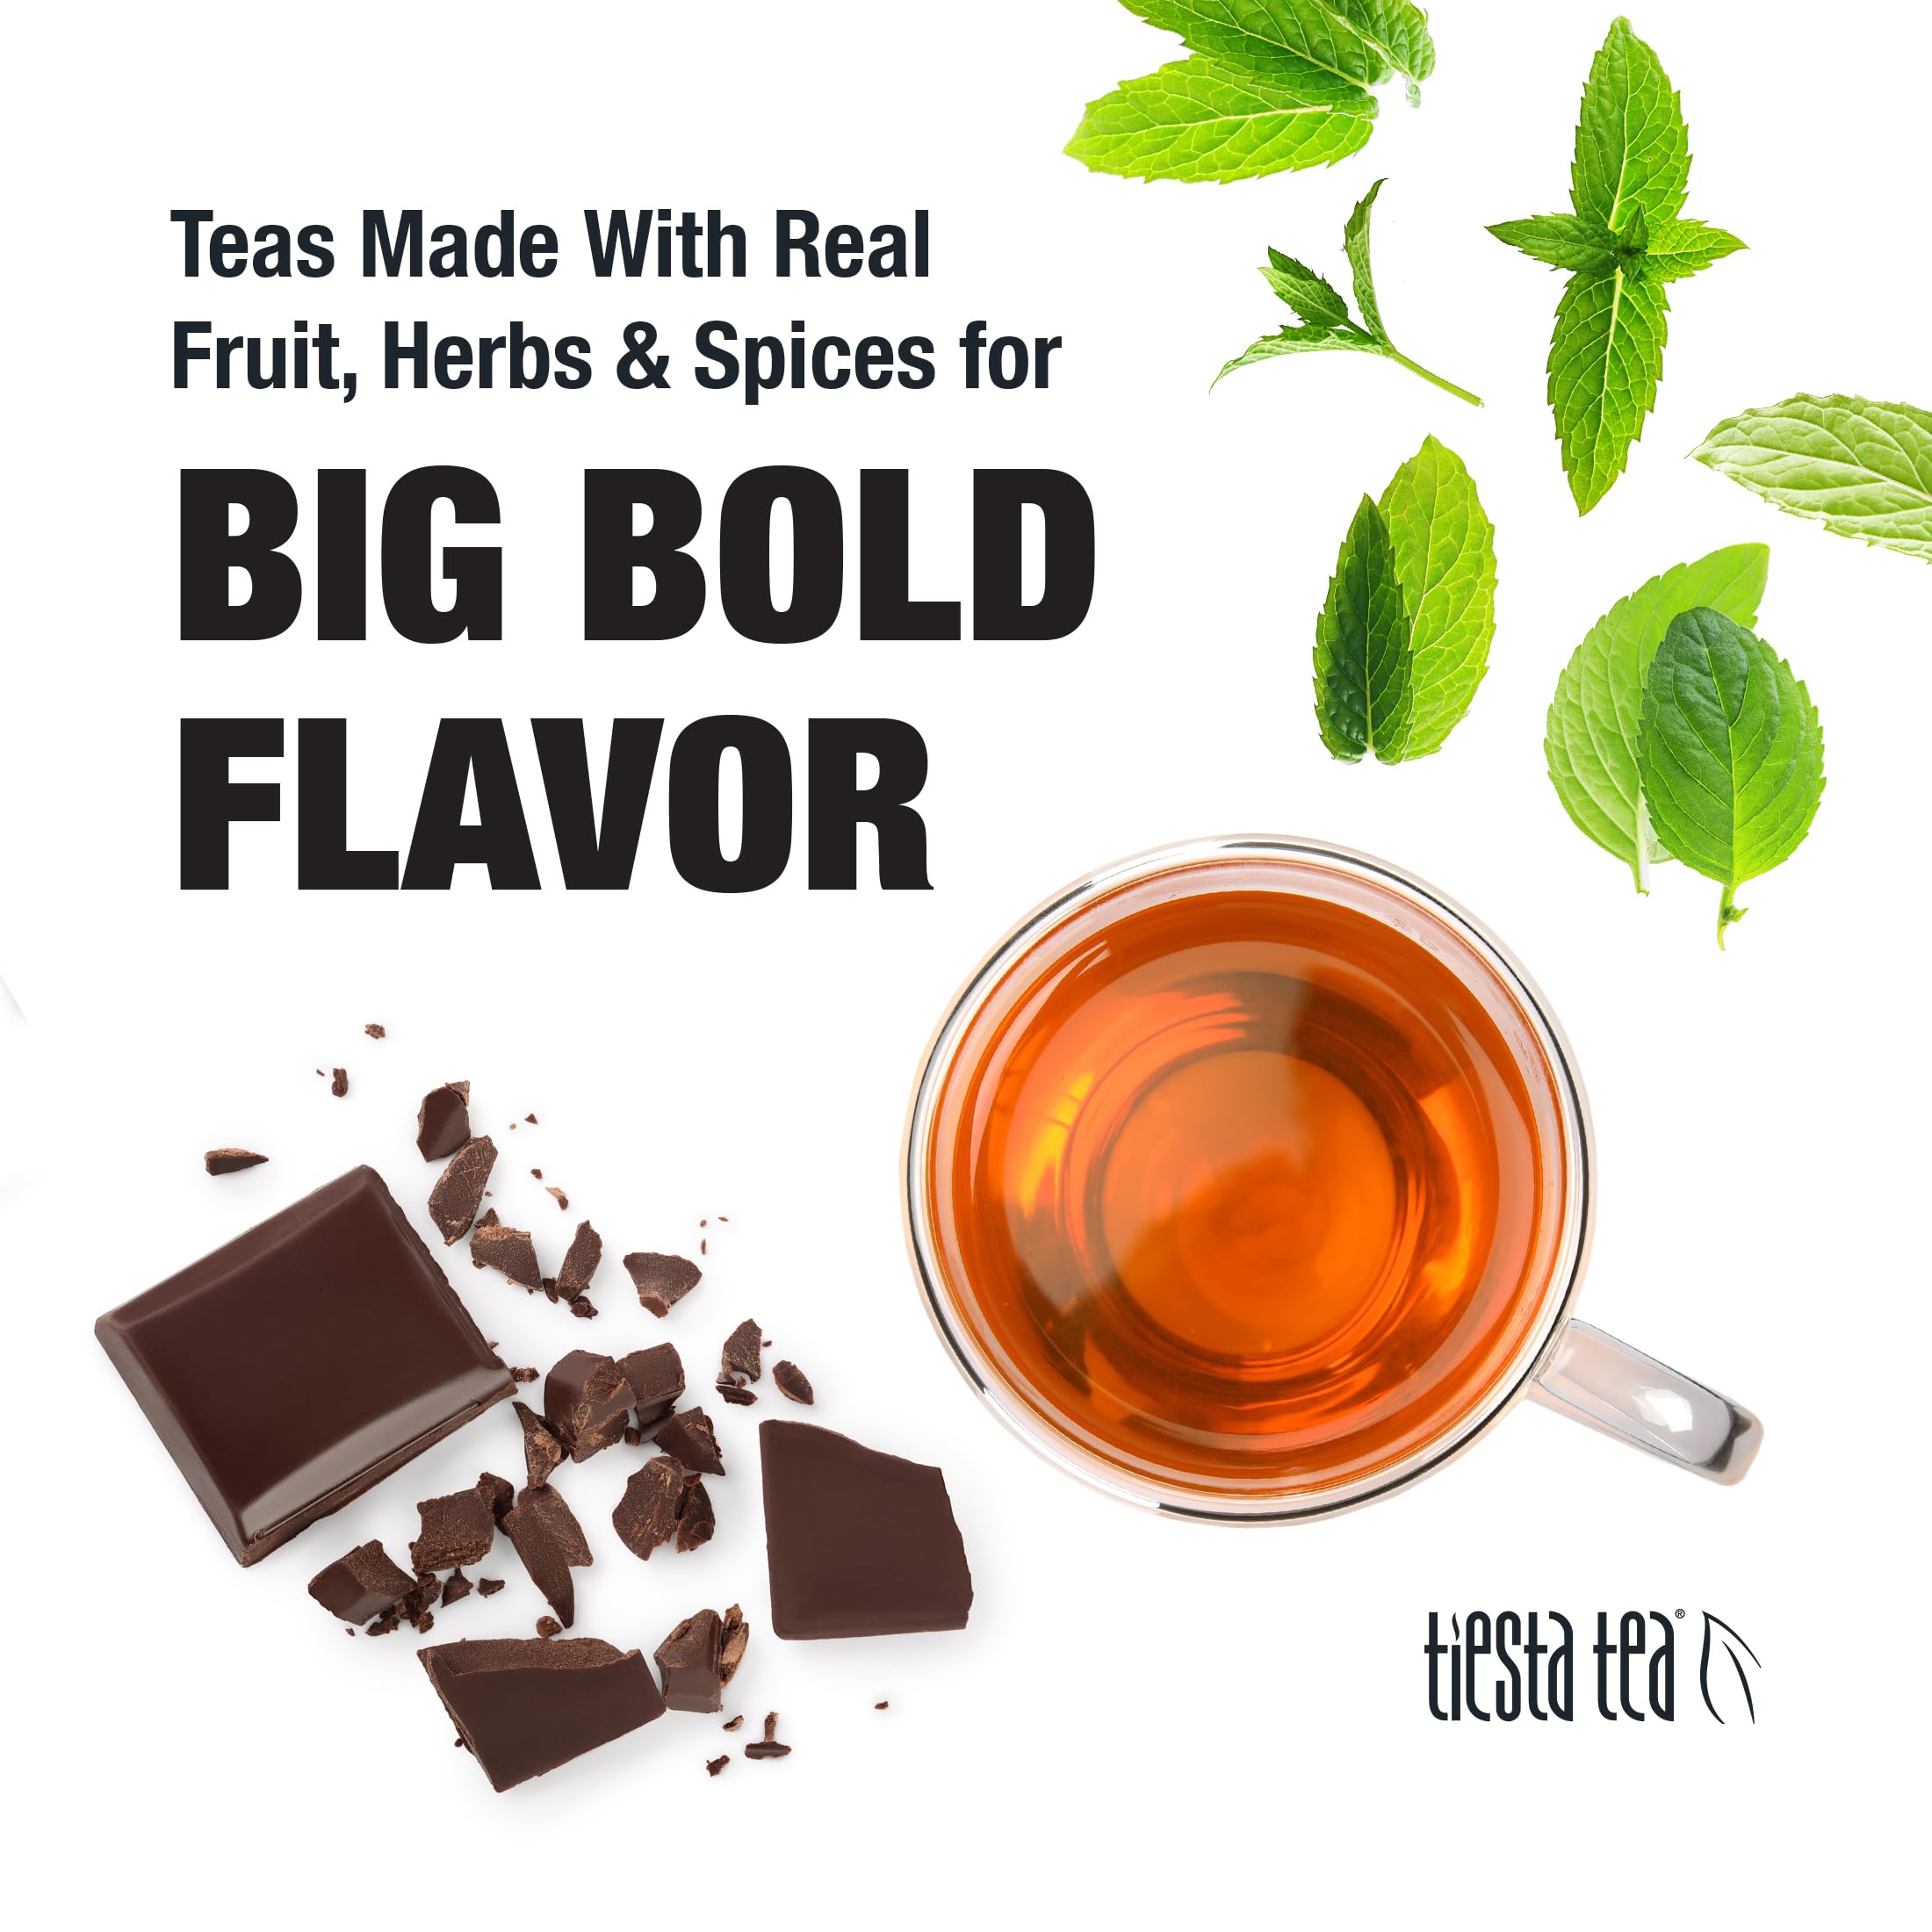 Tiesta Tea - Cocoa Mint Chill | Chocolate Peppermint Herbal Tea | Premium Loose Leaf Tea Blend | Non-Caffeinated Tea | Make Hot or Iced Tea & Brews Up to 50 Cups - 3 Ounce Refillable Tin